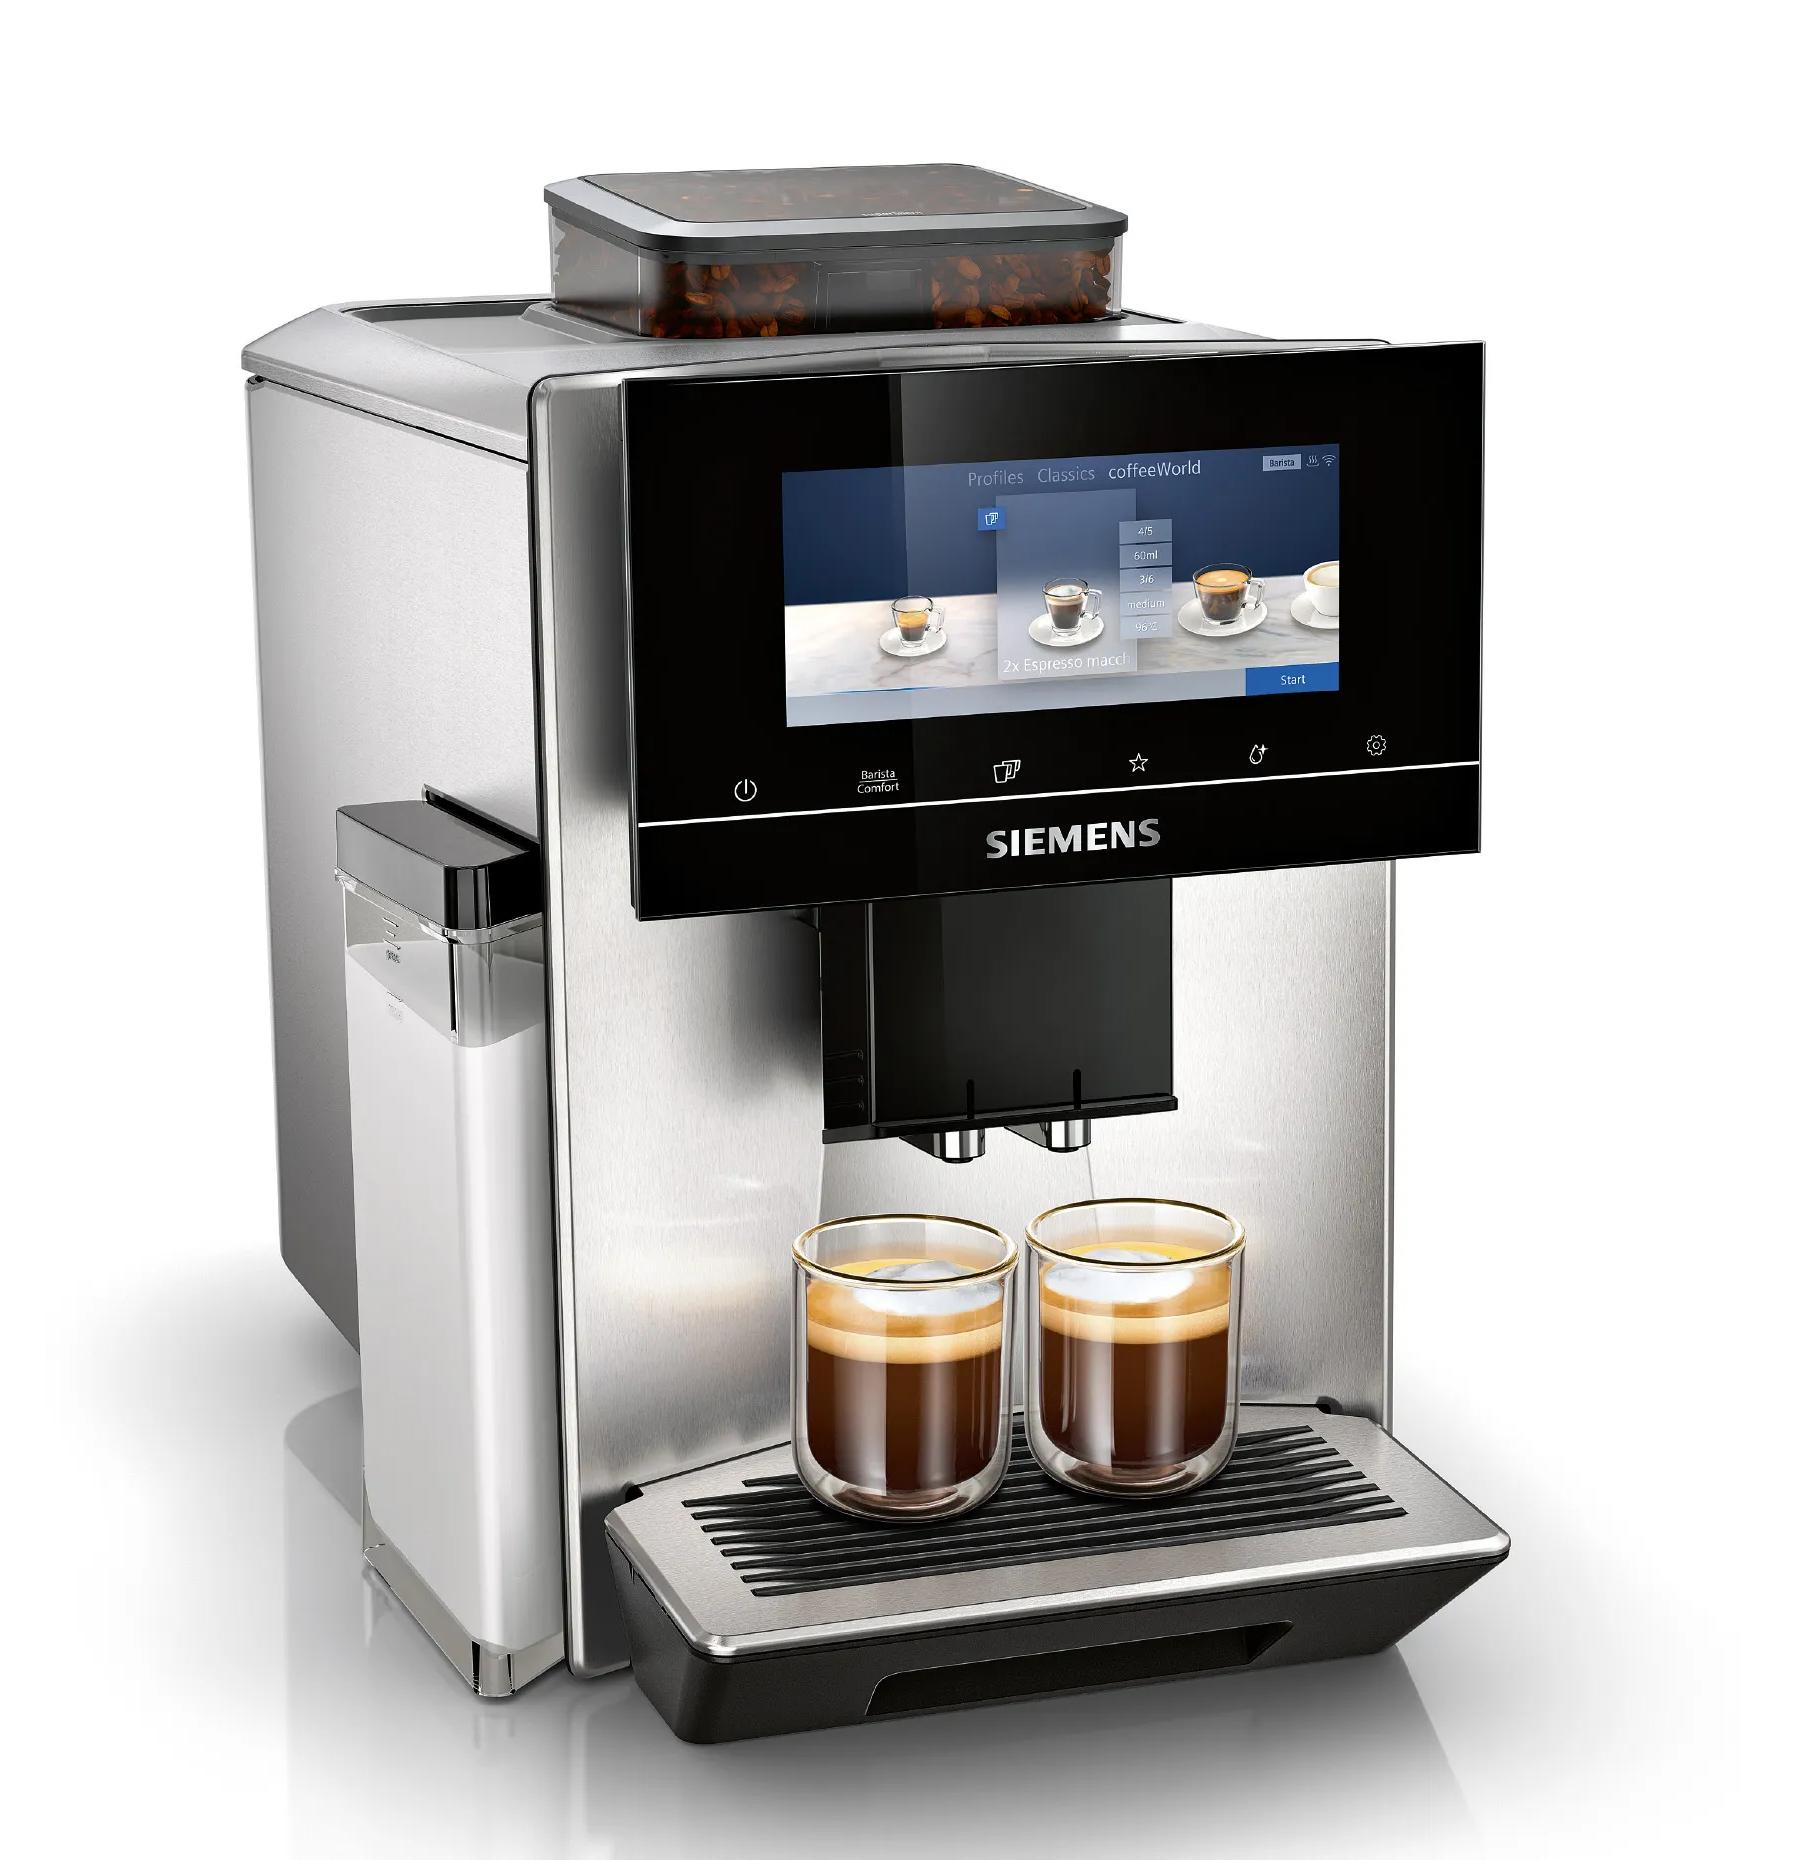 Siemens TQ903R03 coffee maker